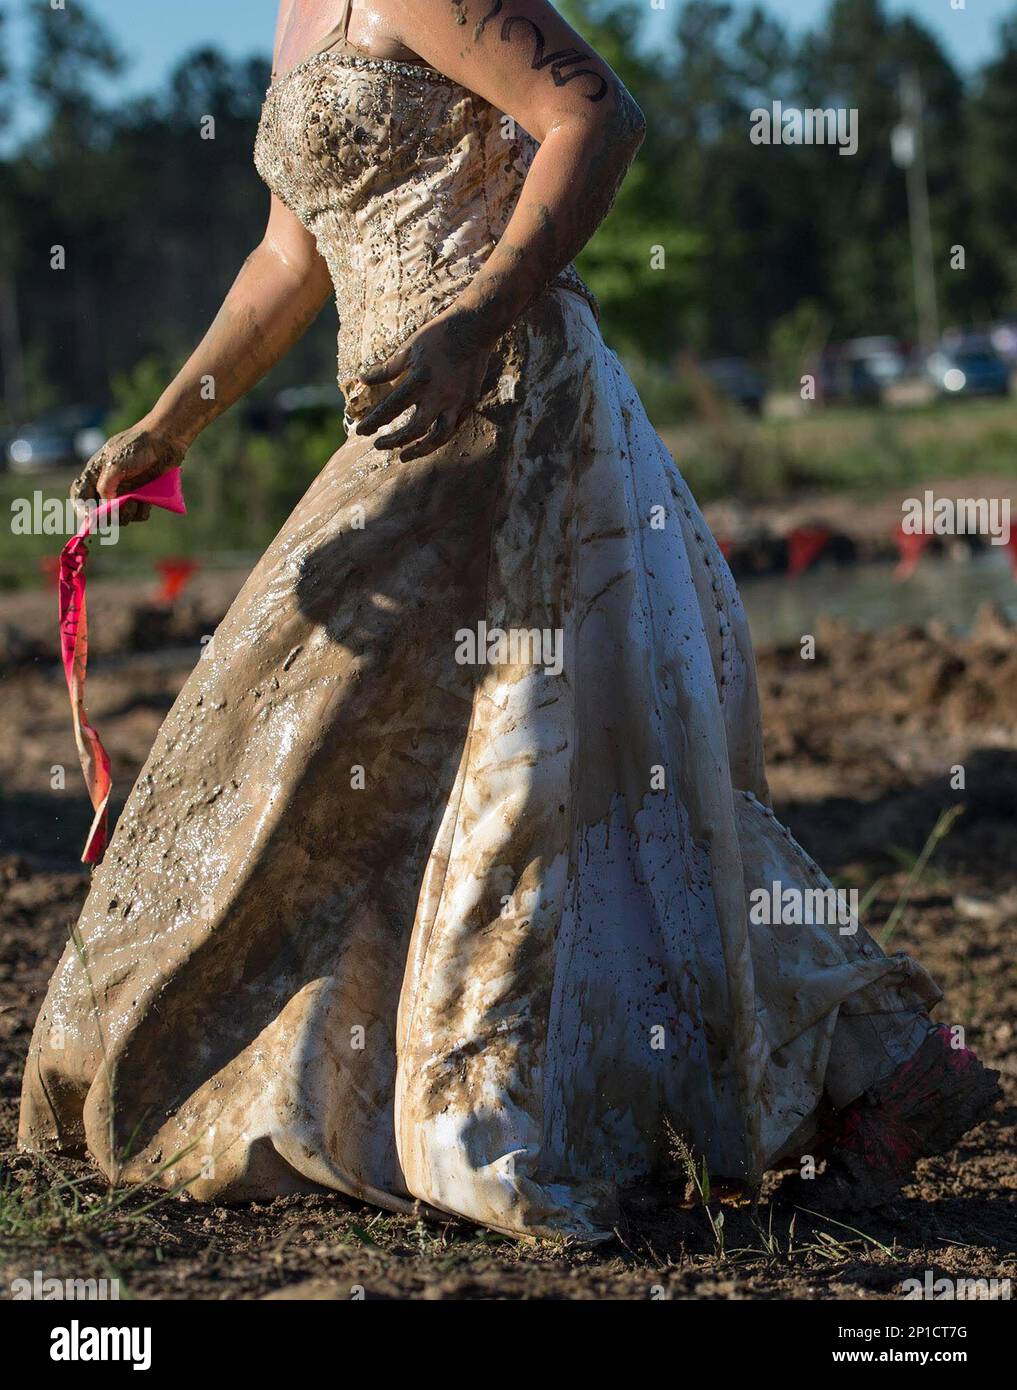 Mud Dress